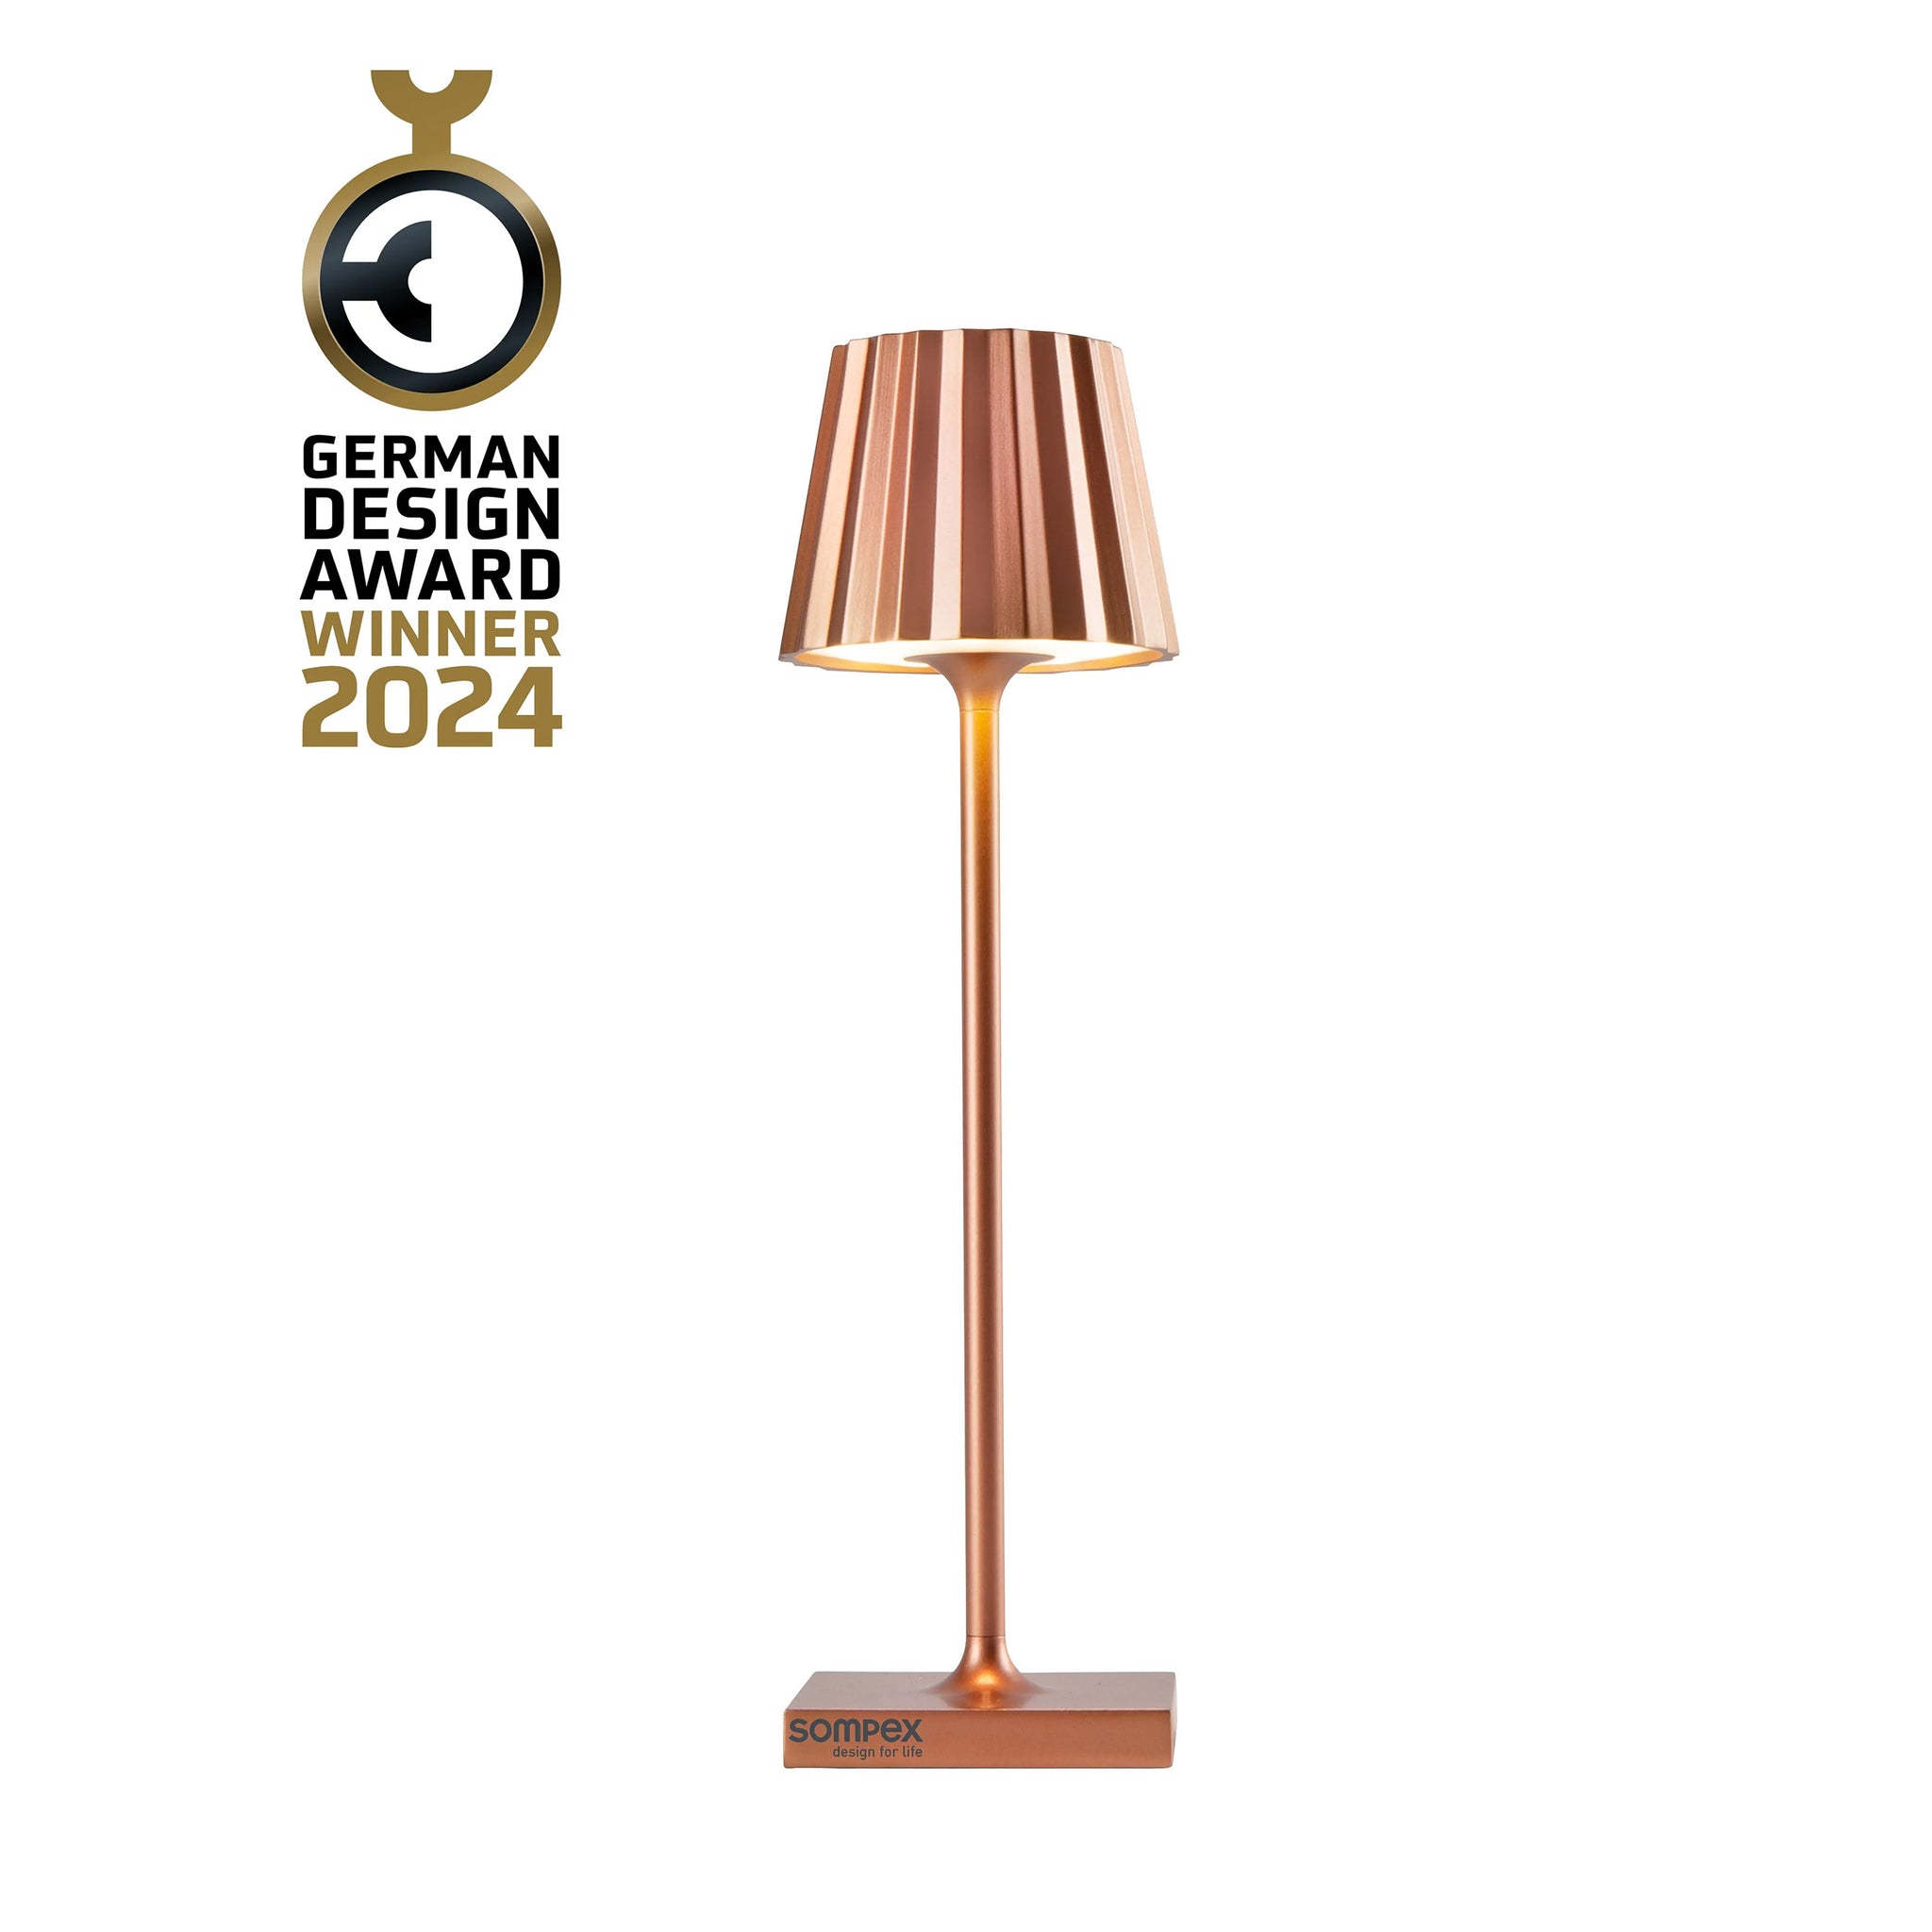 Sompex Troll Nano Koper│Oplaadbare Tafellamp│Buitenverlichting│art. 78588│met logo German Design Award Winner 2024